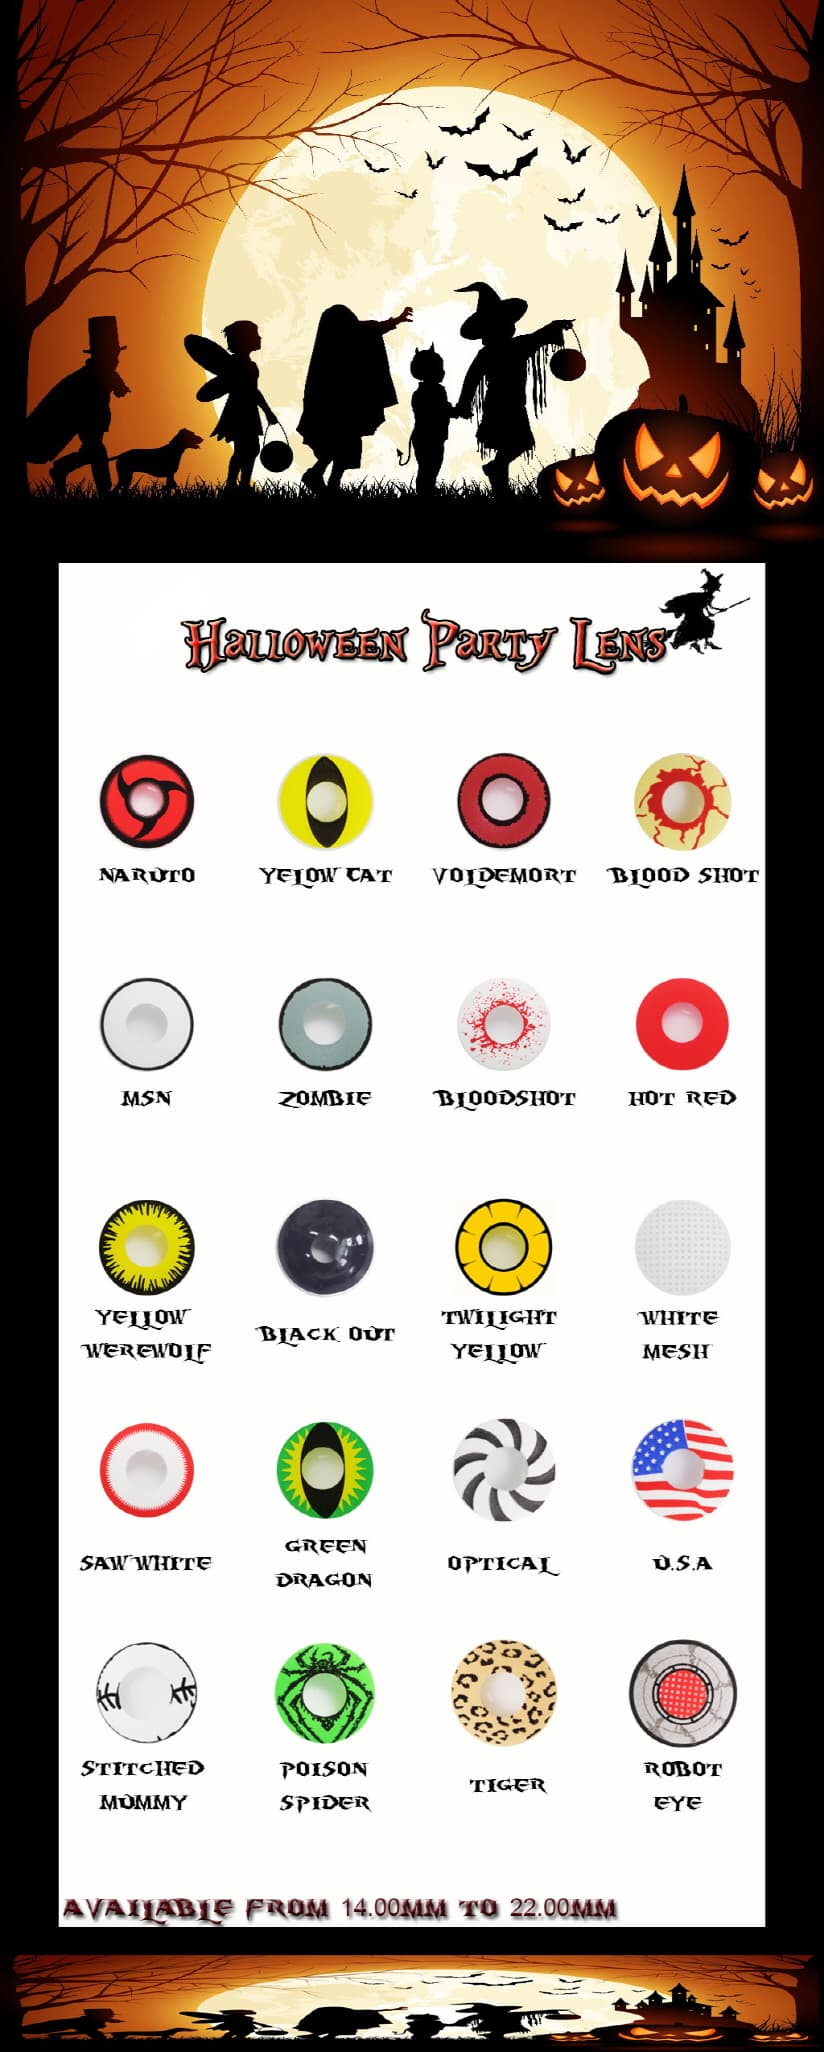 Halloween party lens